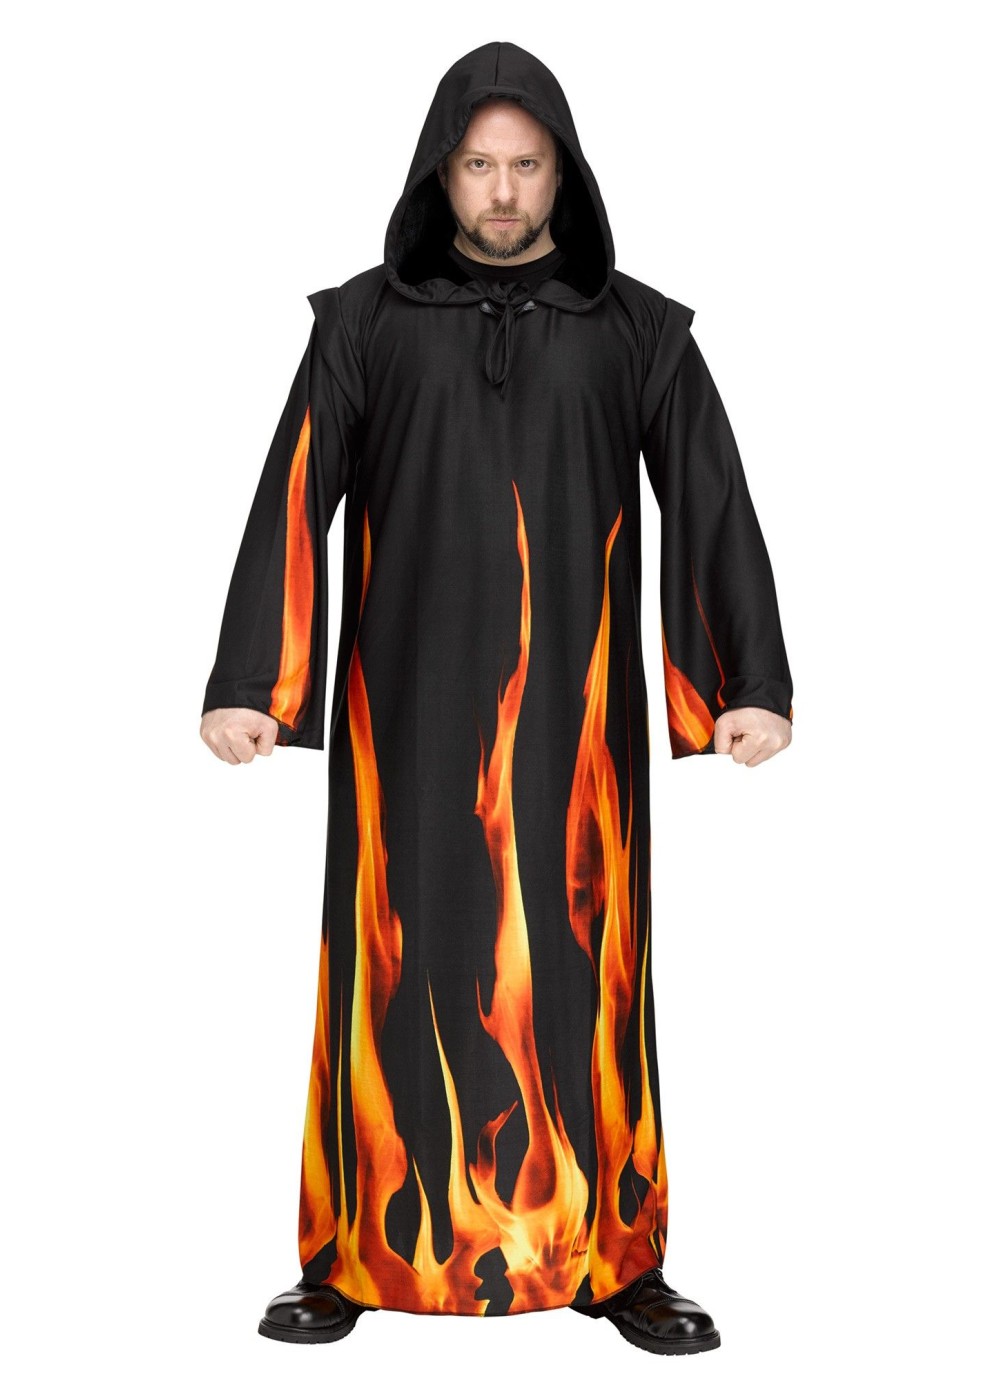 Burning Robe Men Costume